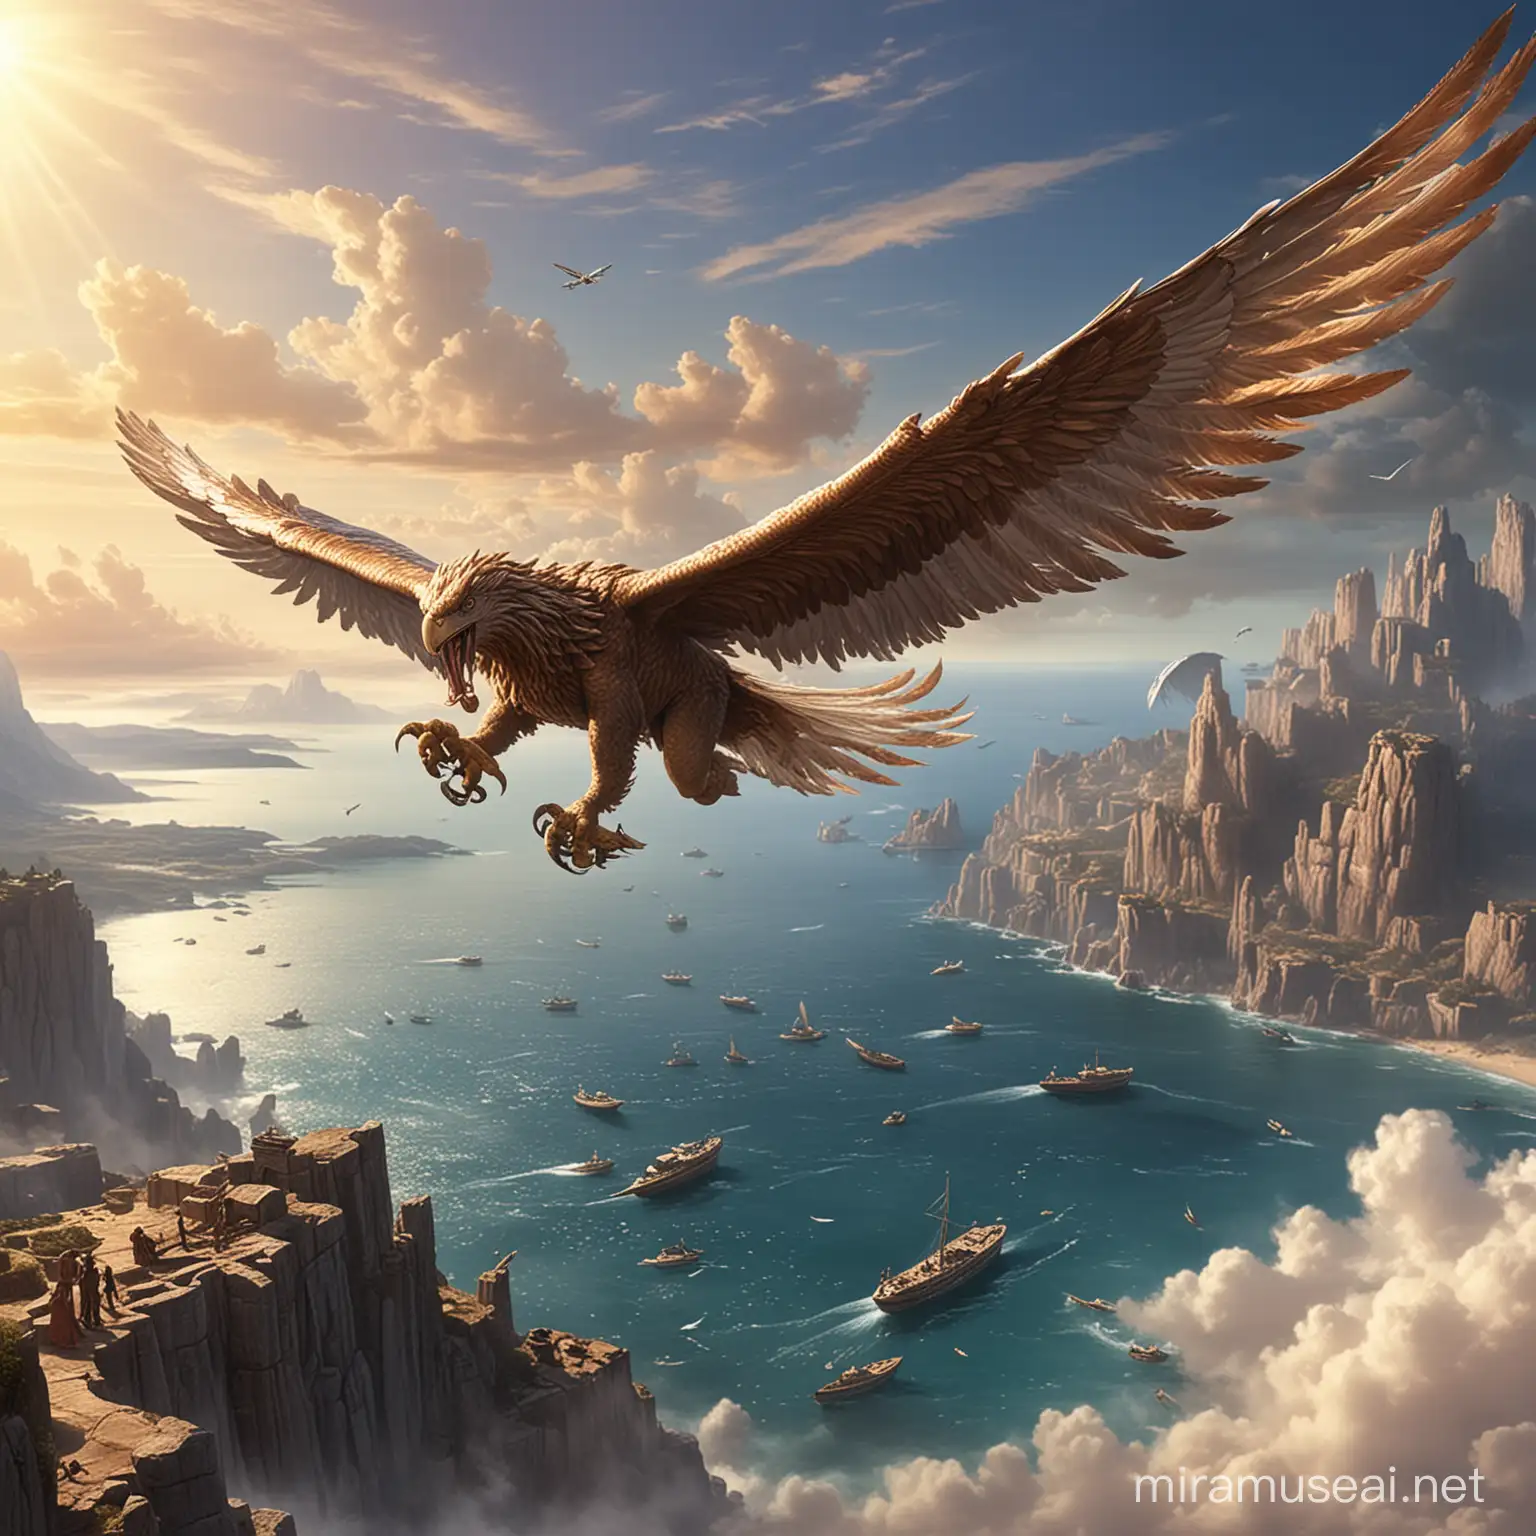 Flight of Icarus legend picture